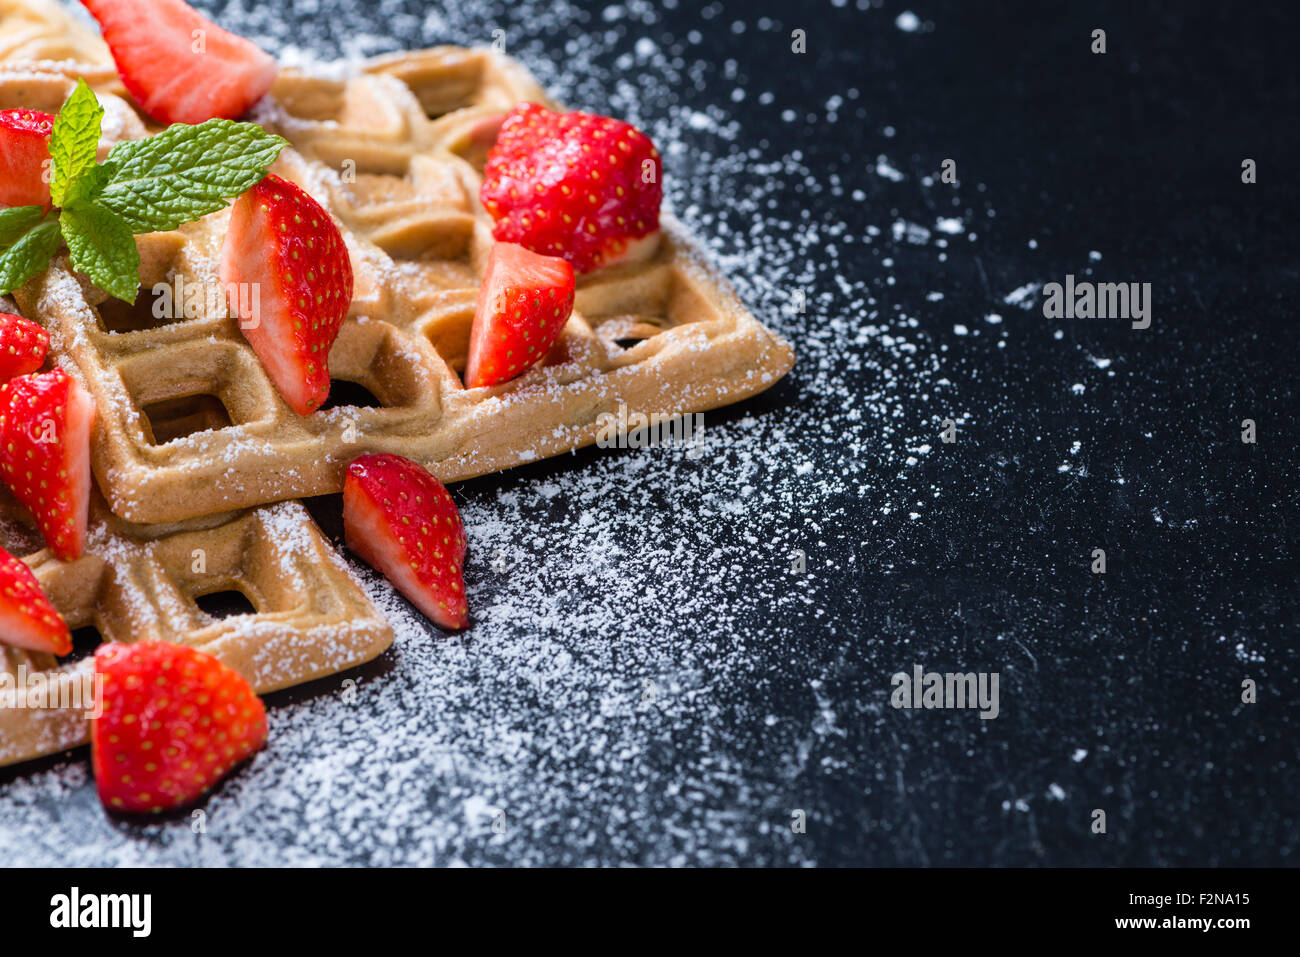 Homemade Waffles with fresh Strawberries (on dark background) Stock Photo